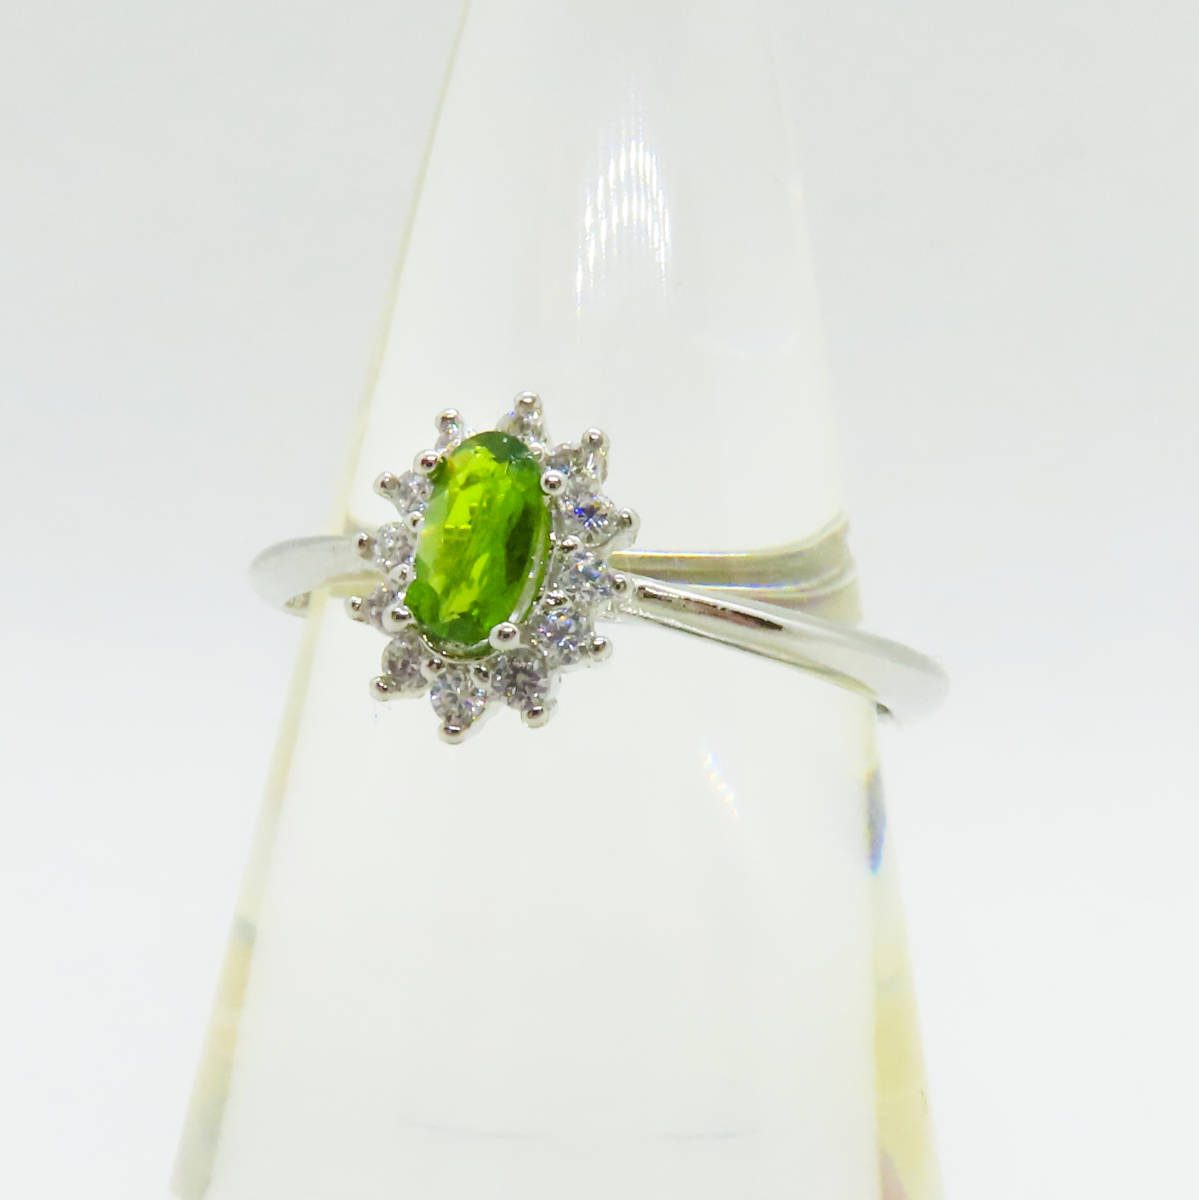  new goods large OP rhinoceros skull m. shining stone diamond 925 silver ring ring gem natural stone emerald 